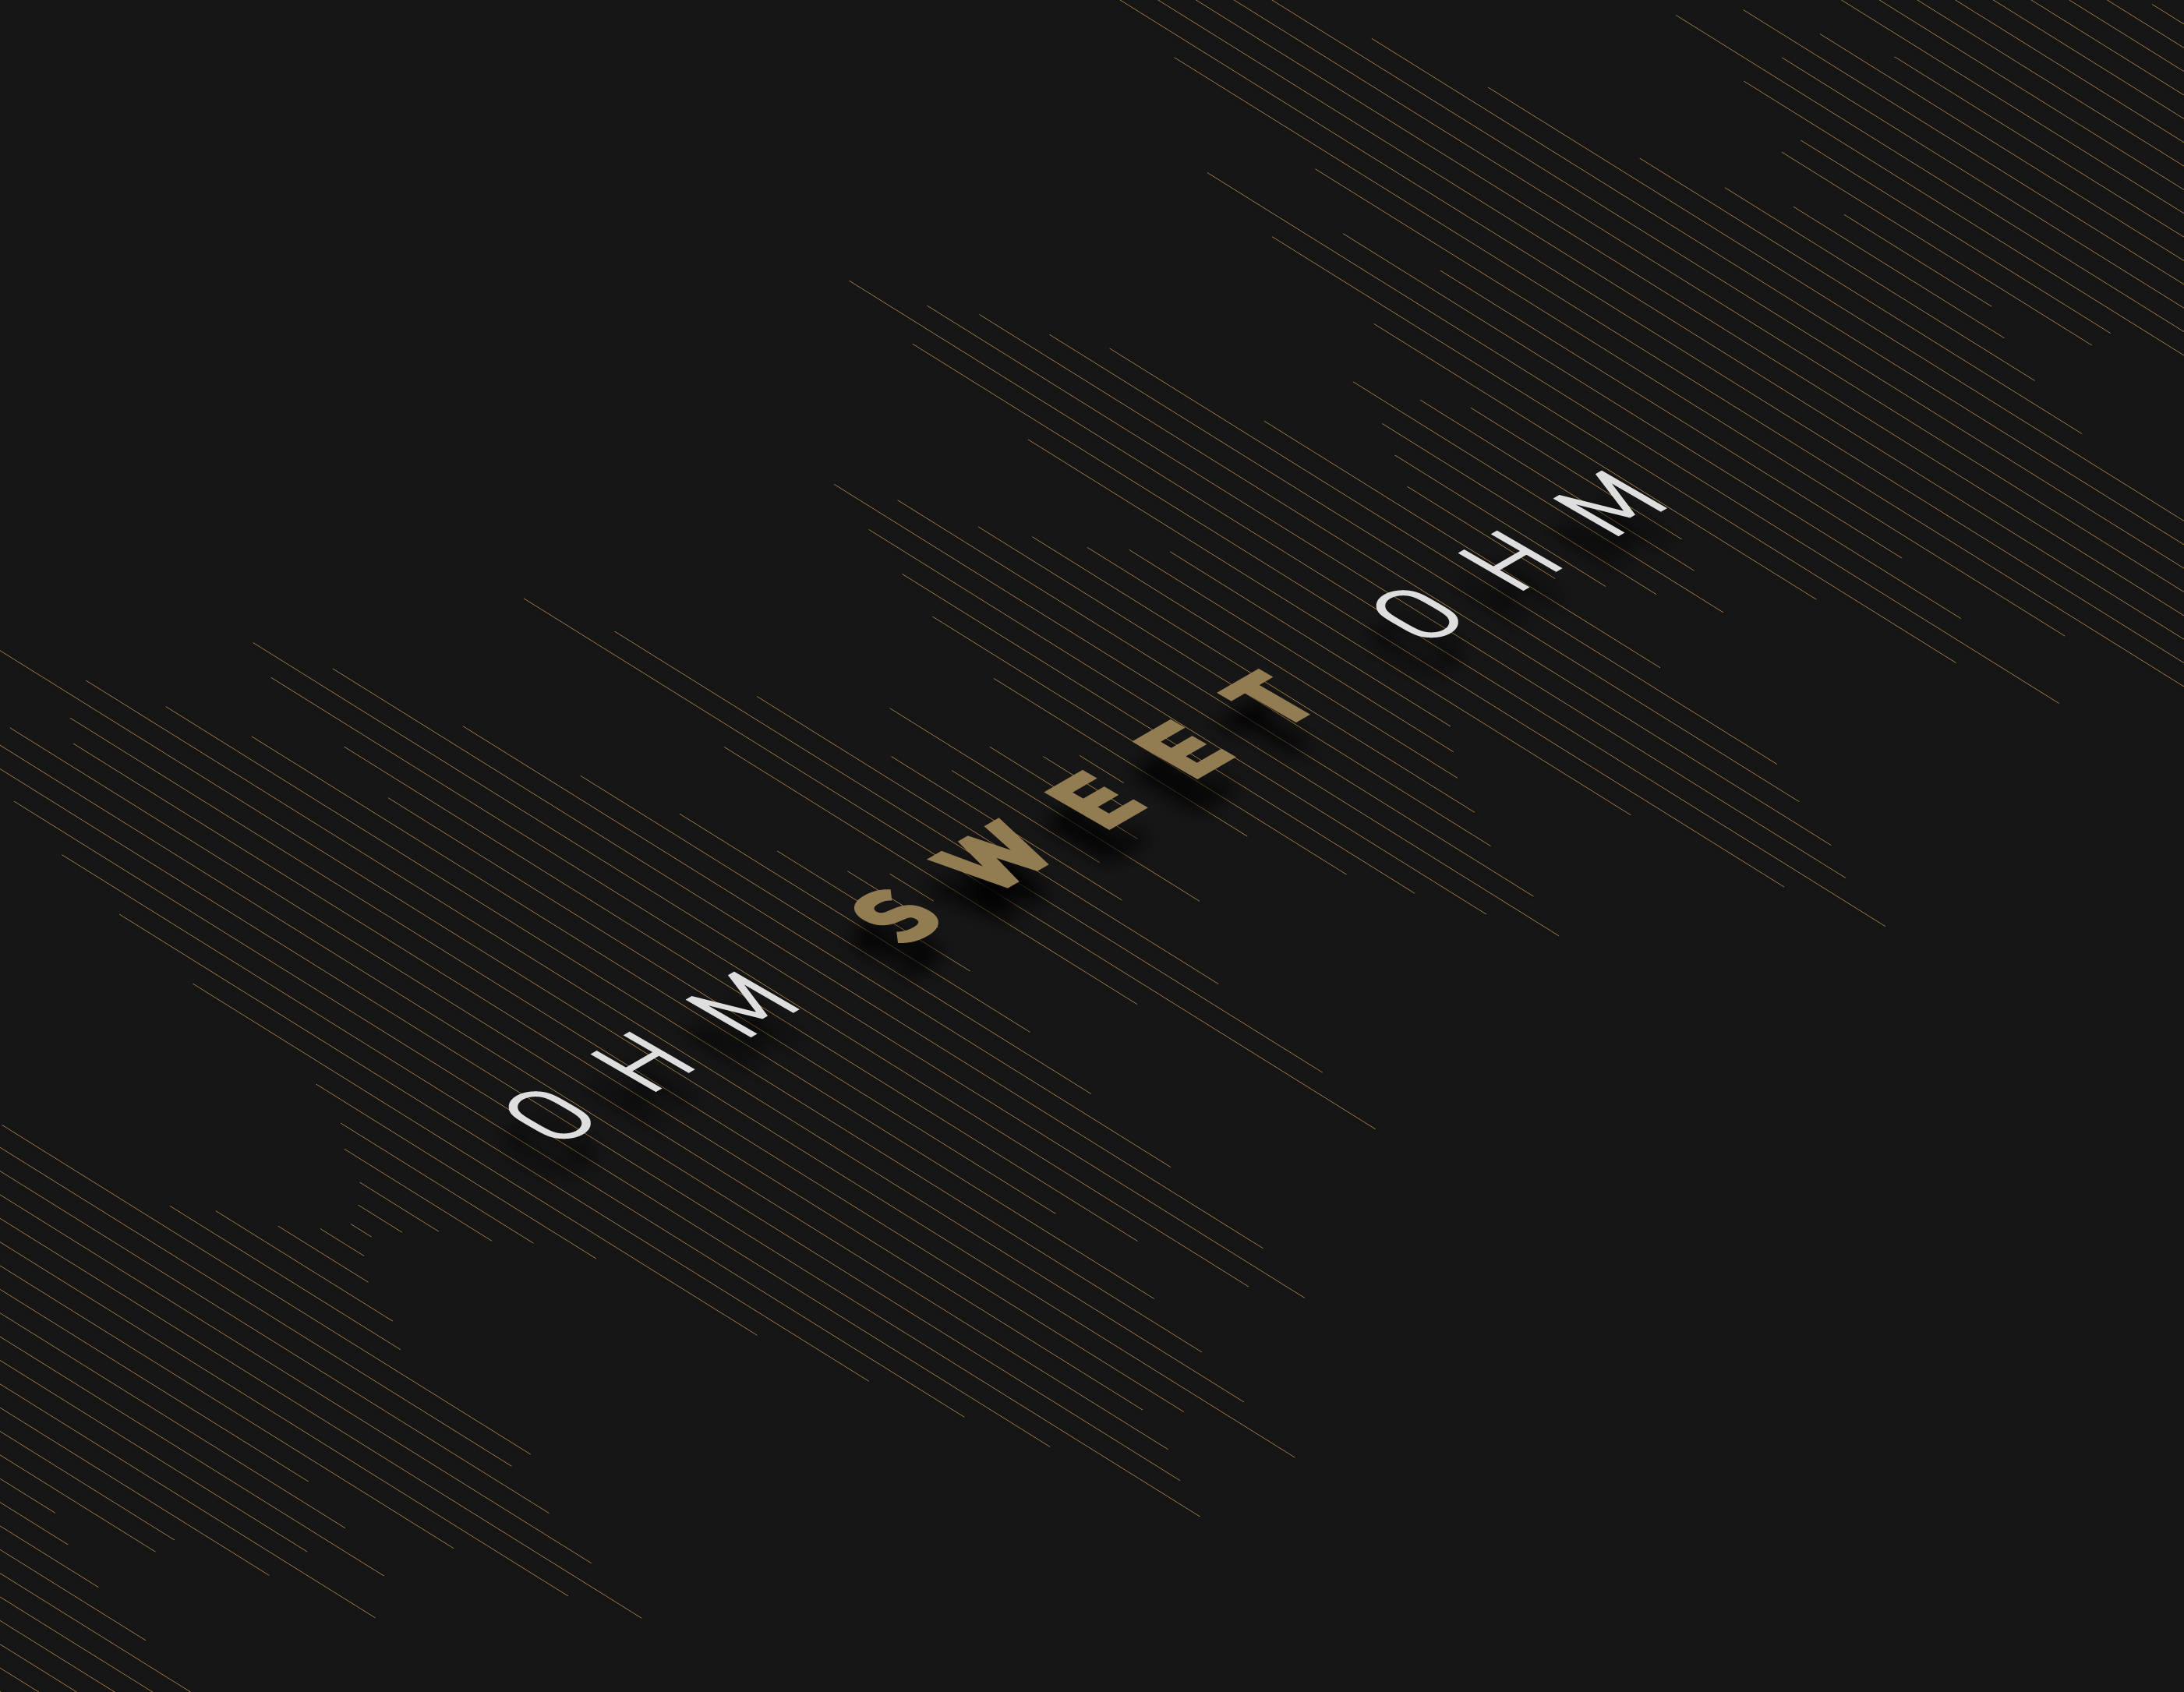 Branding y diseño web para Sweet Ohm por Binarid